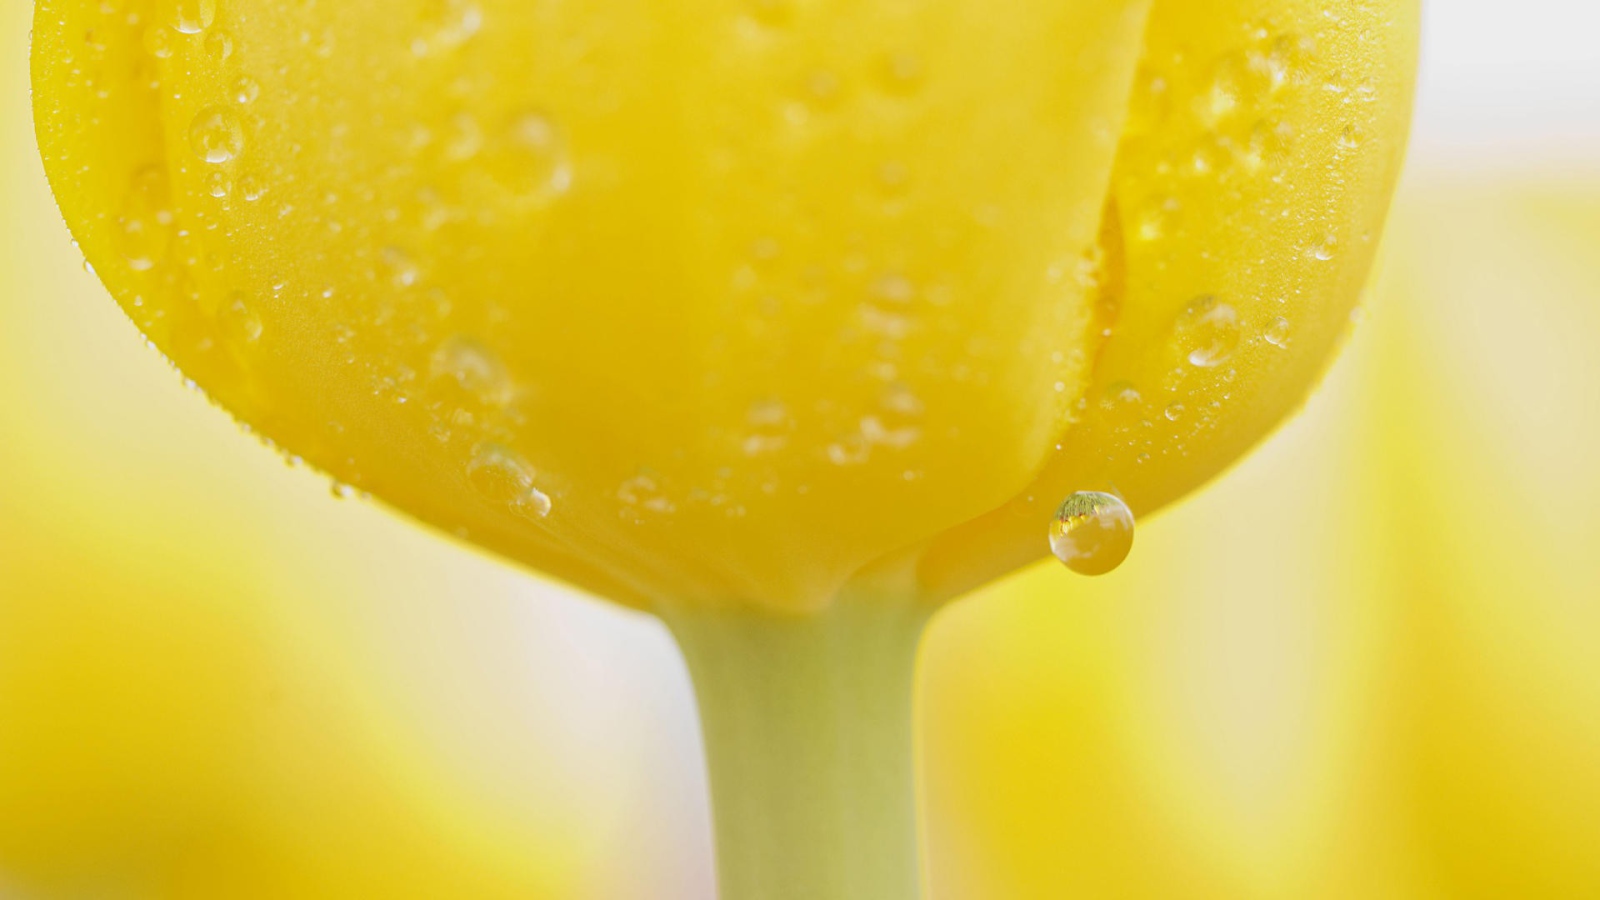 Капли воды на желтом тюльпане